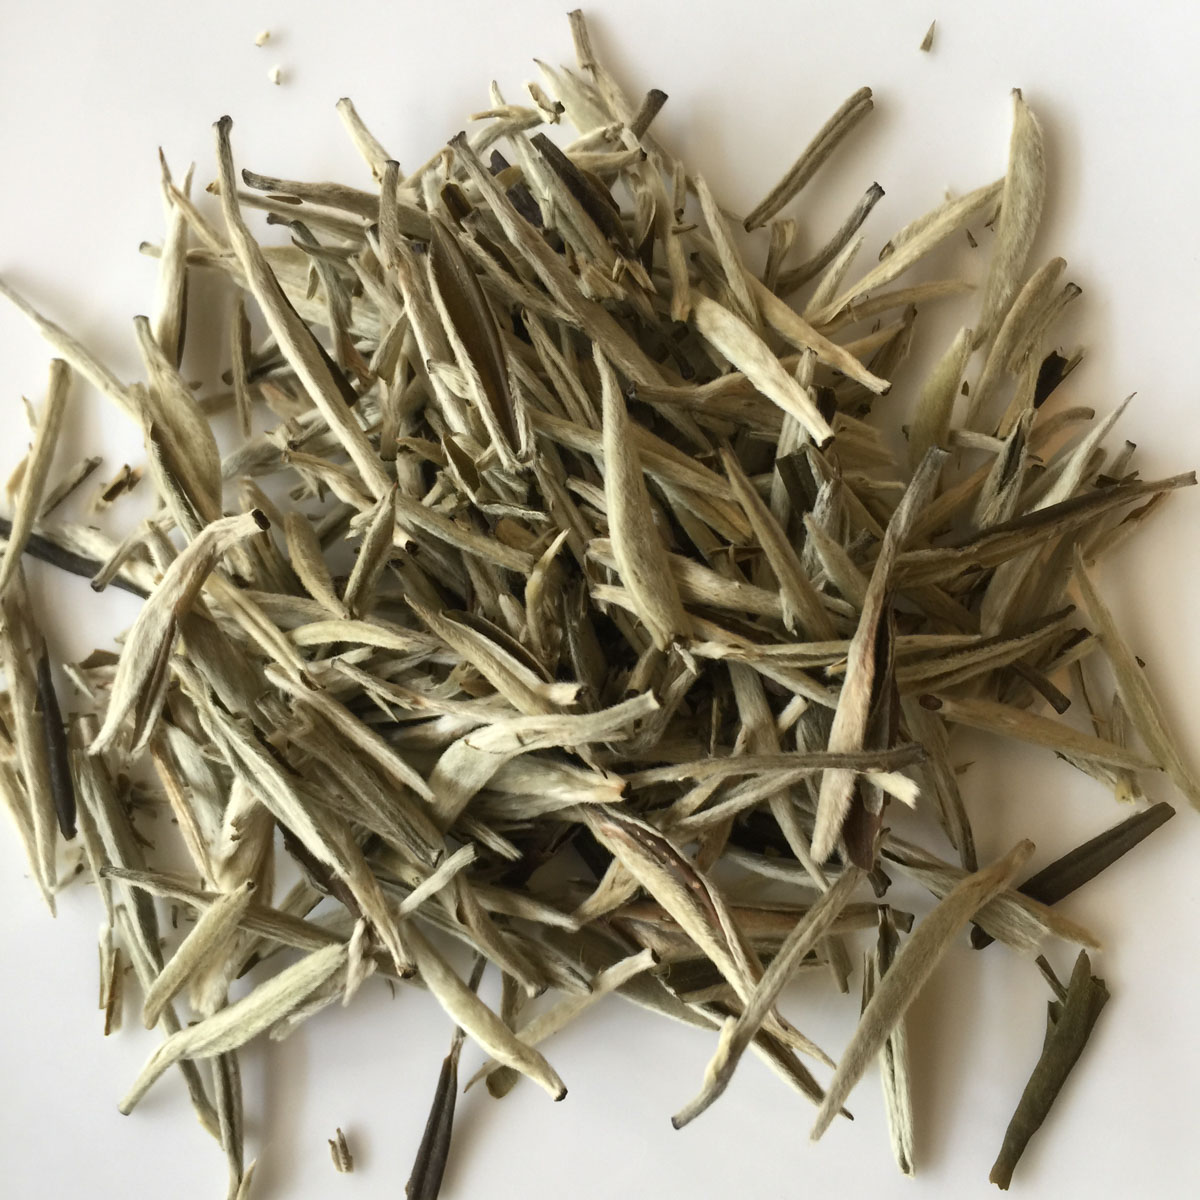 dry loose leaf organic silver needle white tea on white background